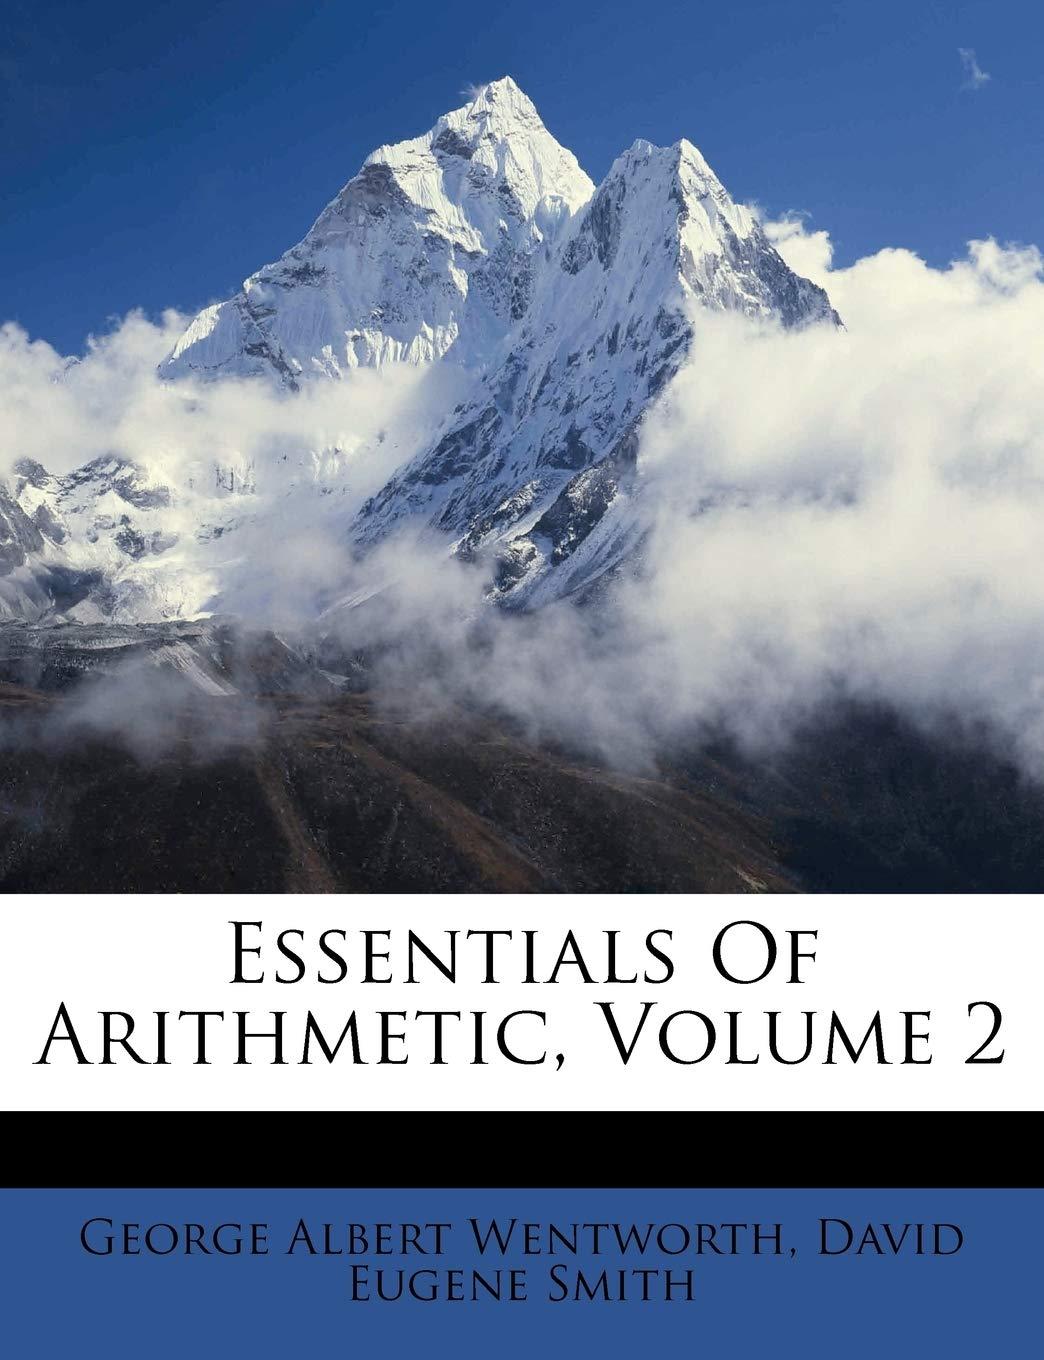 essentials of arithmetic volume 2 1st edition george albert wentworth, david eugene smith 124623551x,